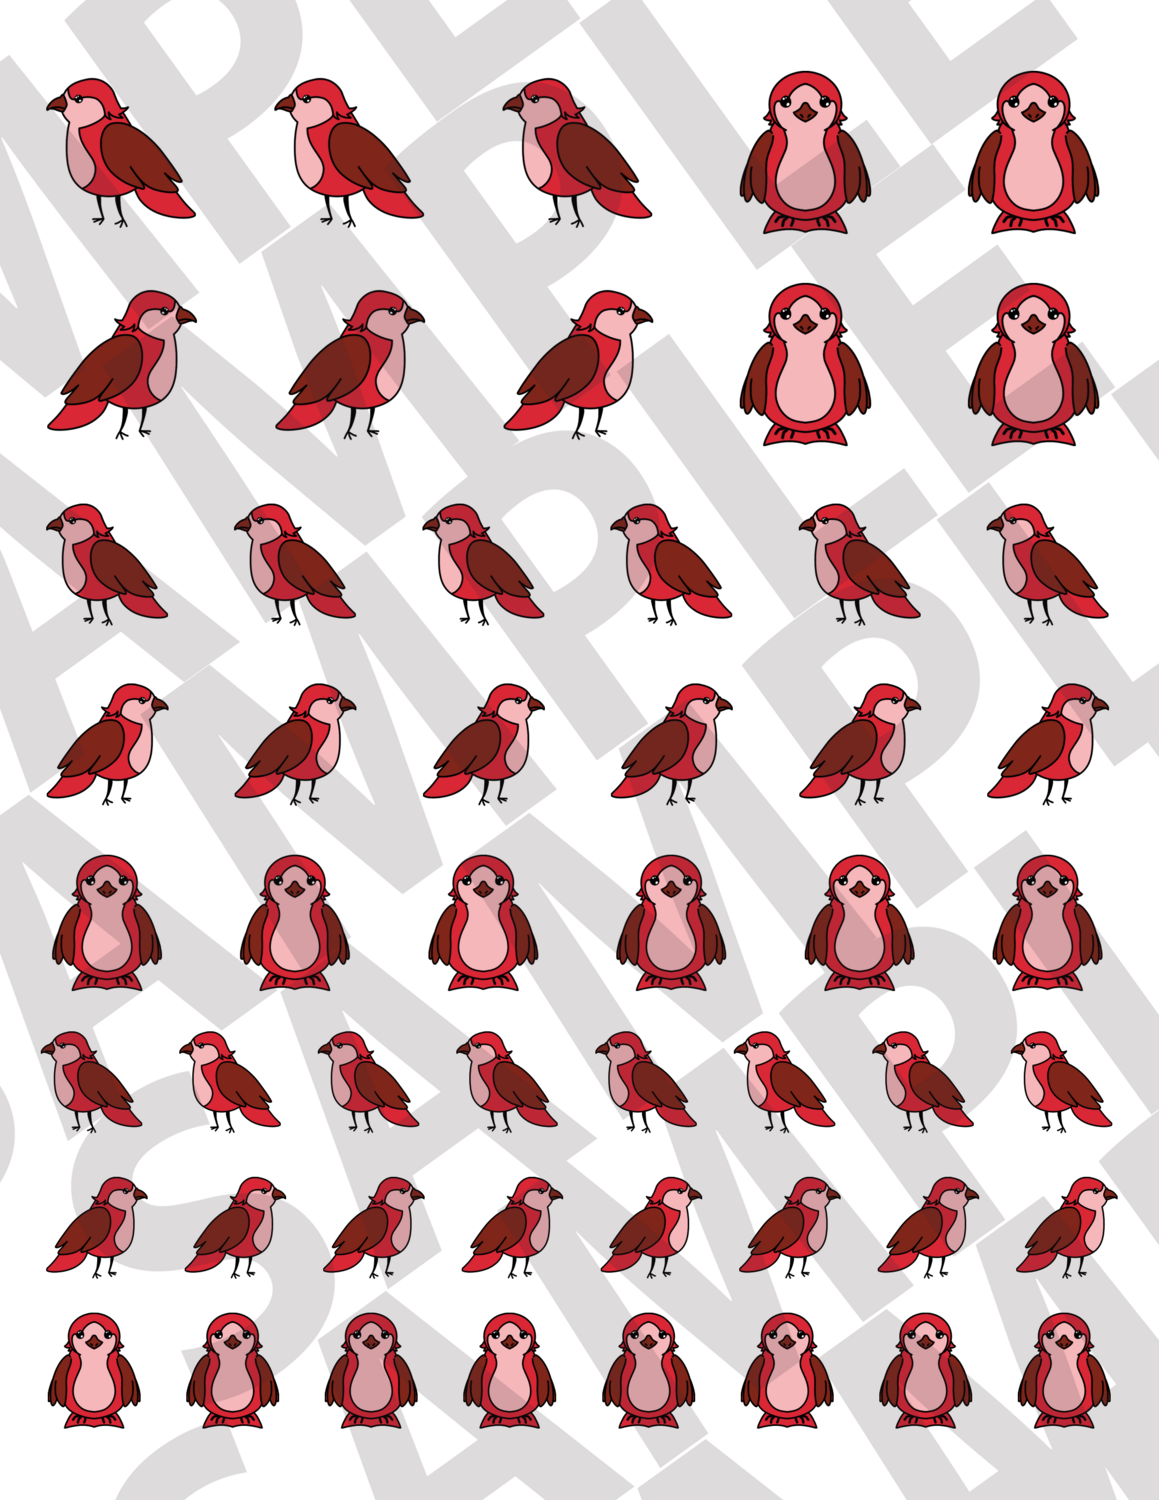 Red - Smaller Birds